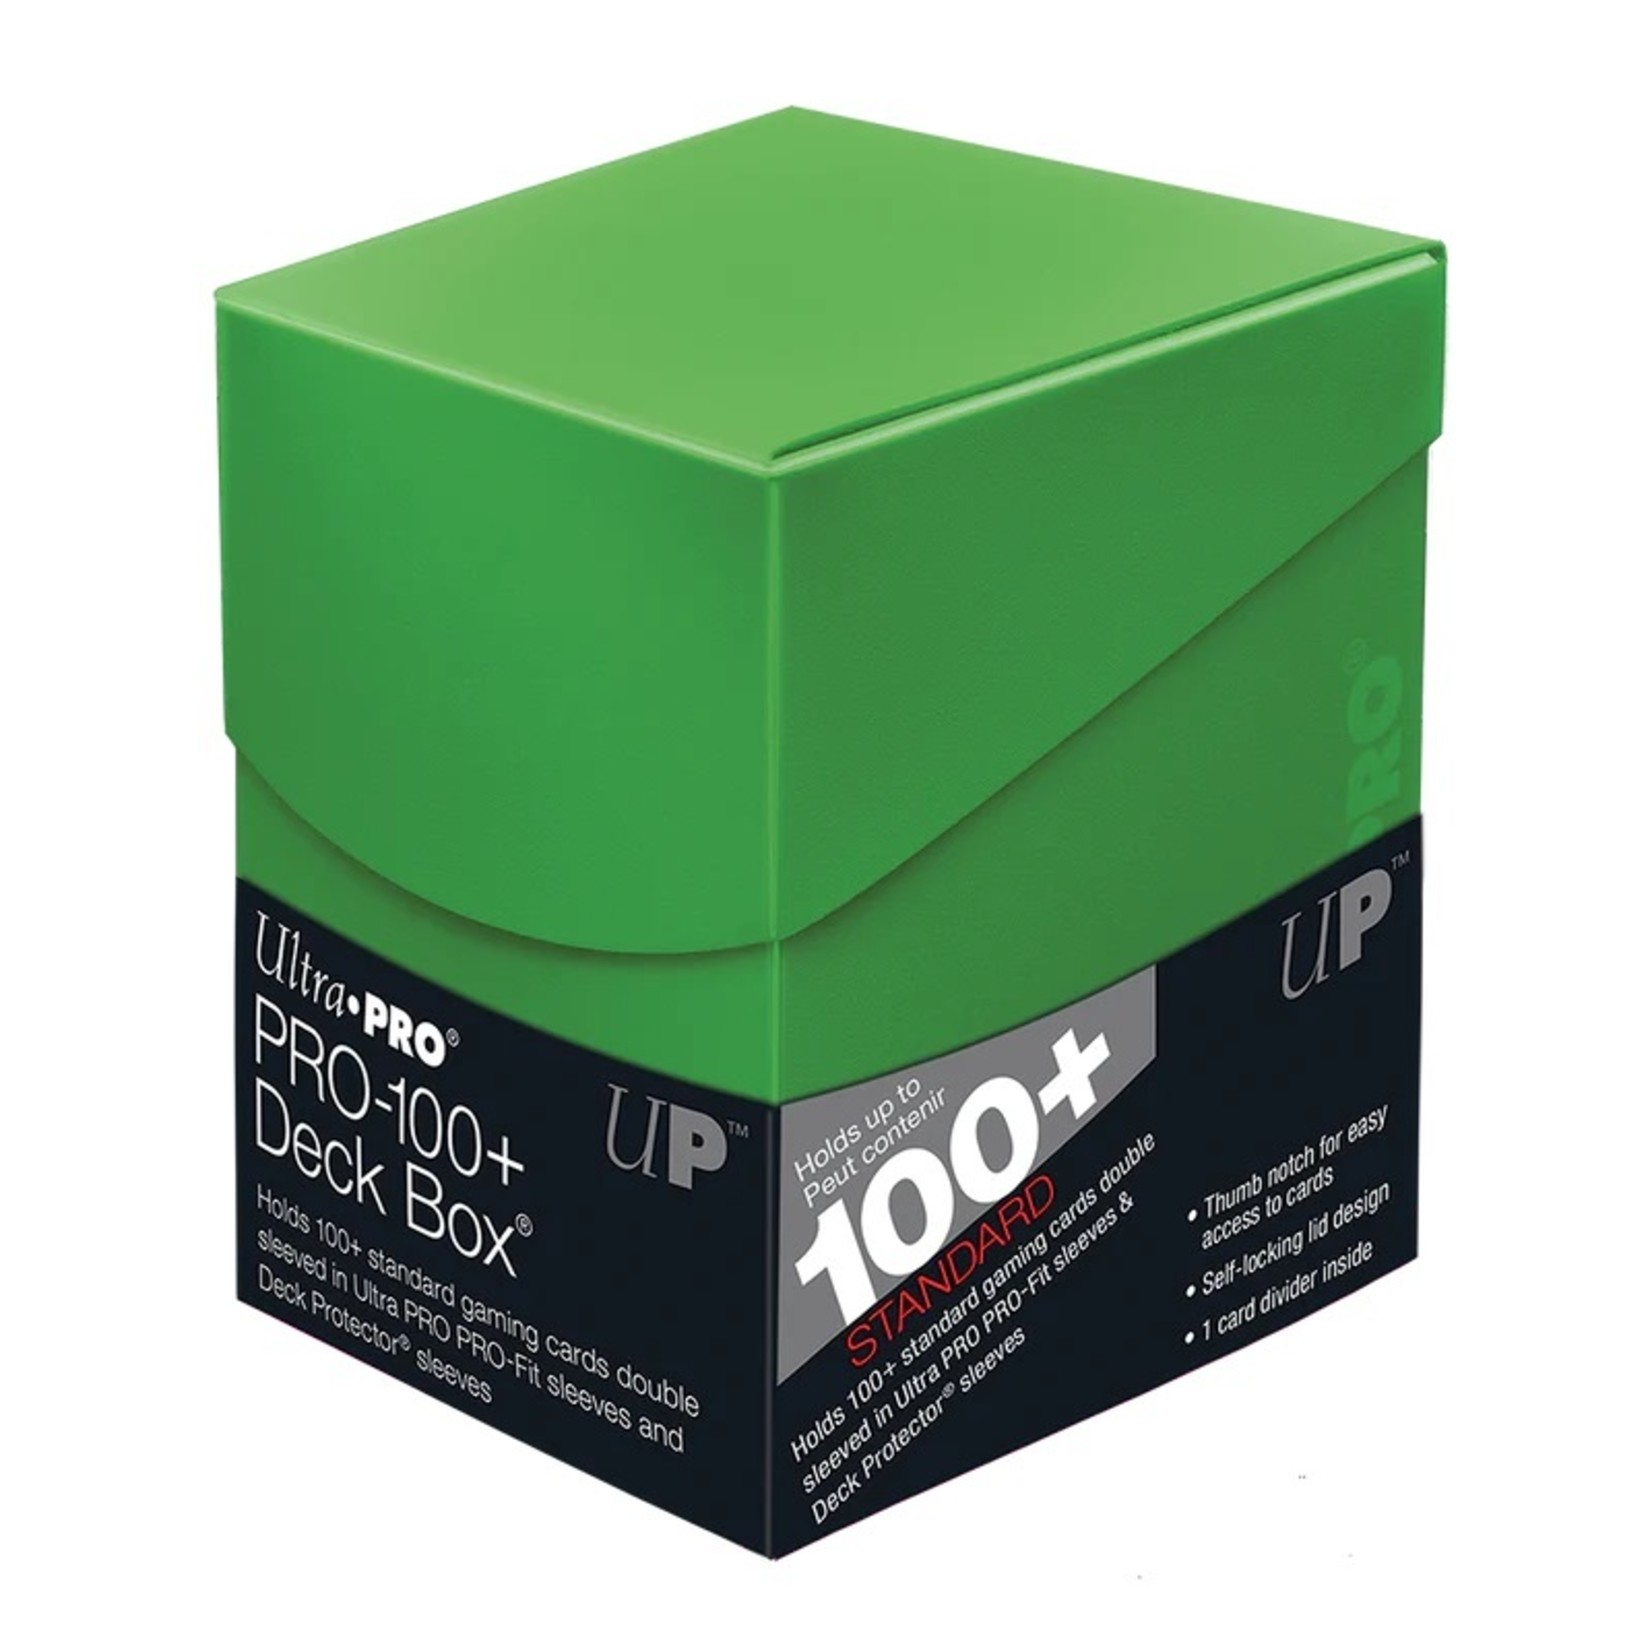 Ultra Pro Eclipse Deck Box 100+:  Lime Green